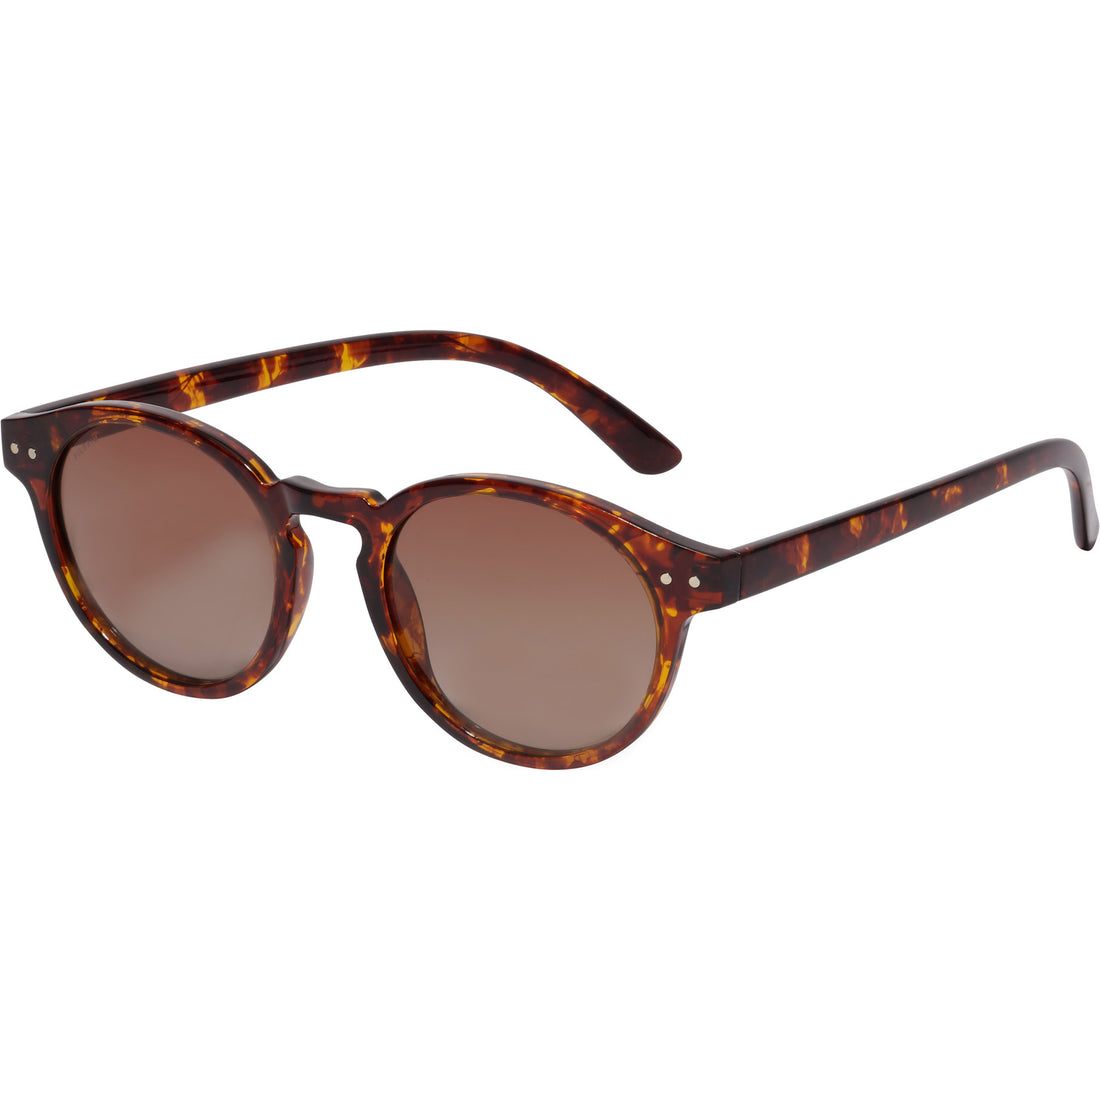 KYRIE sunglasses tortoise brown/gold - PILGRIM